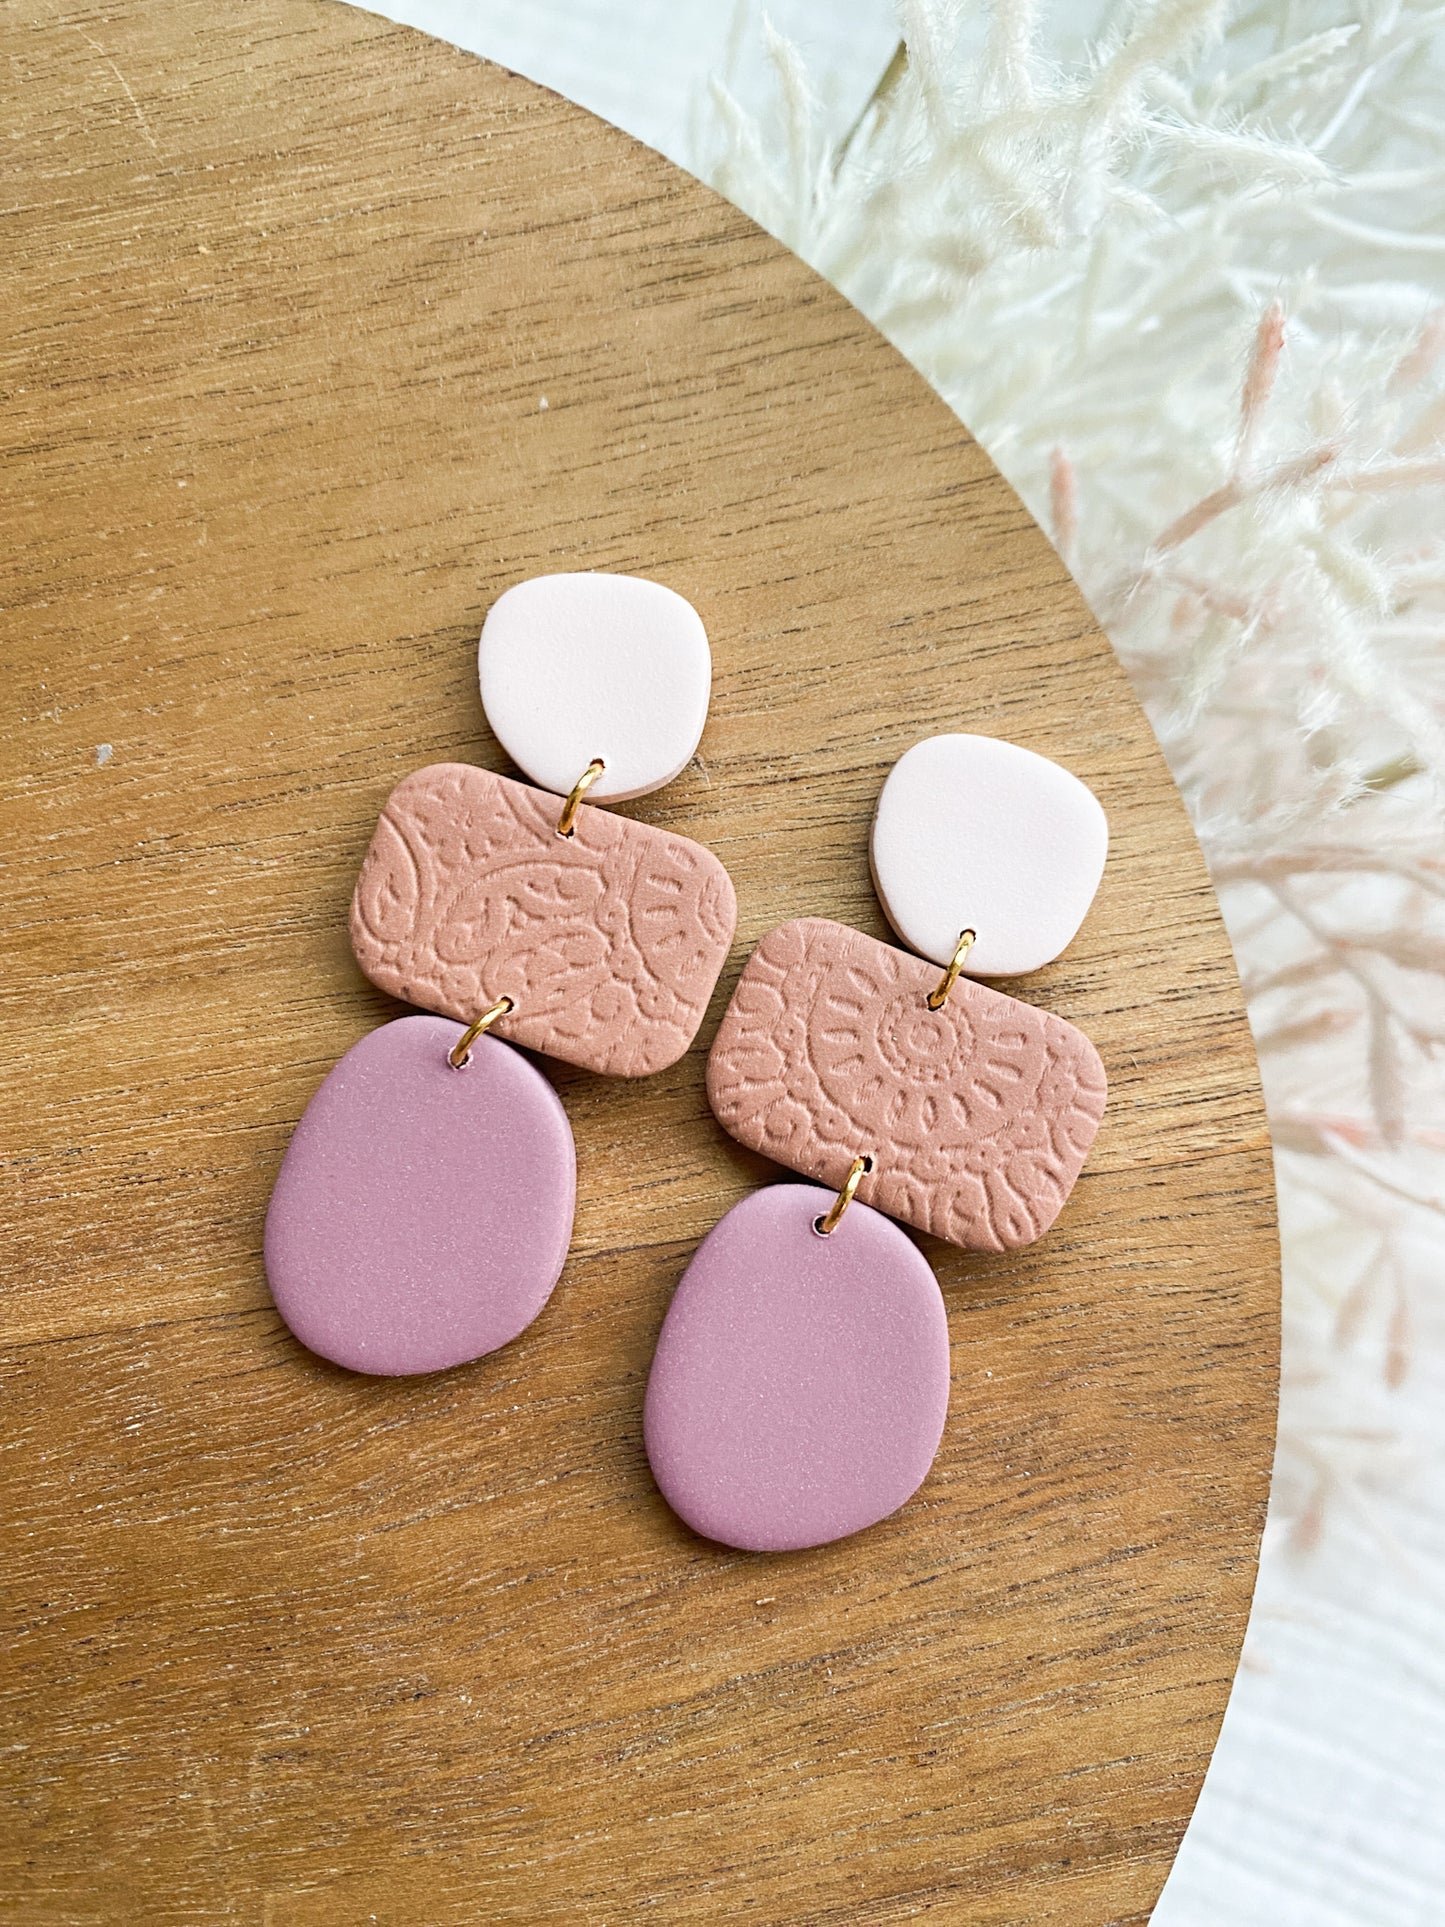 Spring Boho Clay Earrings | Polymer Clay | Handmade | Pinks and Purples | Dangle | Spring Earrings | Organic Shape